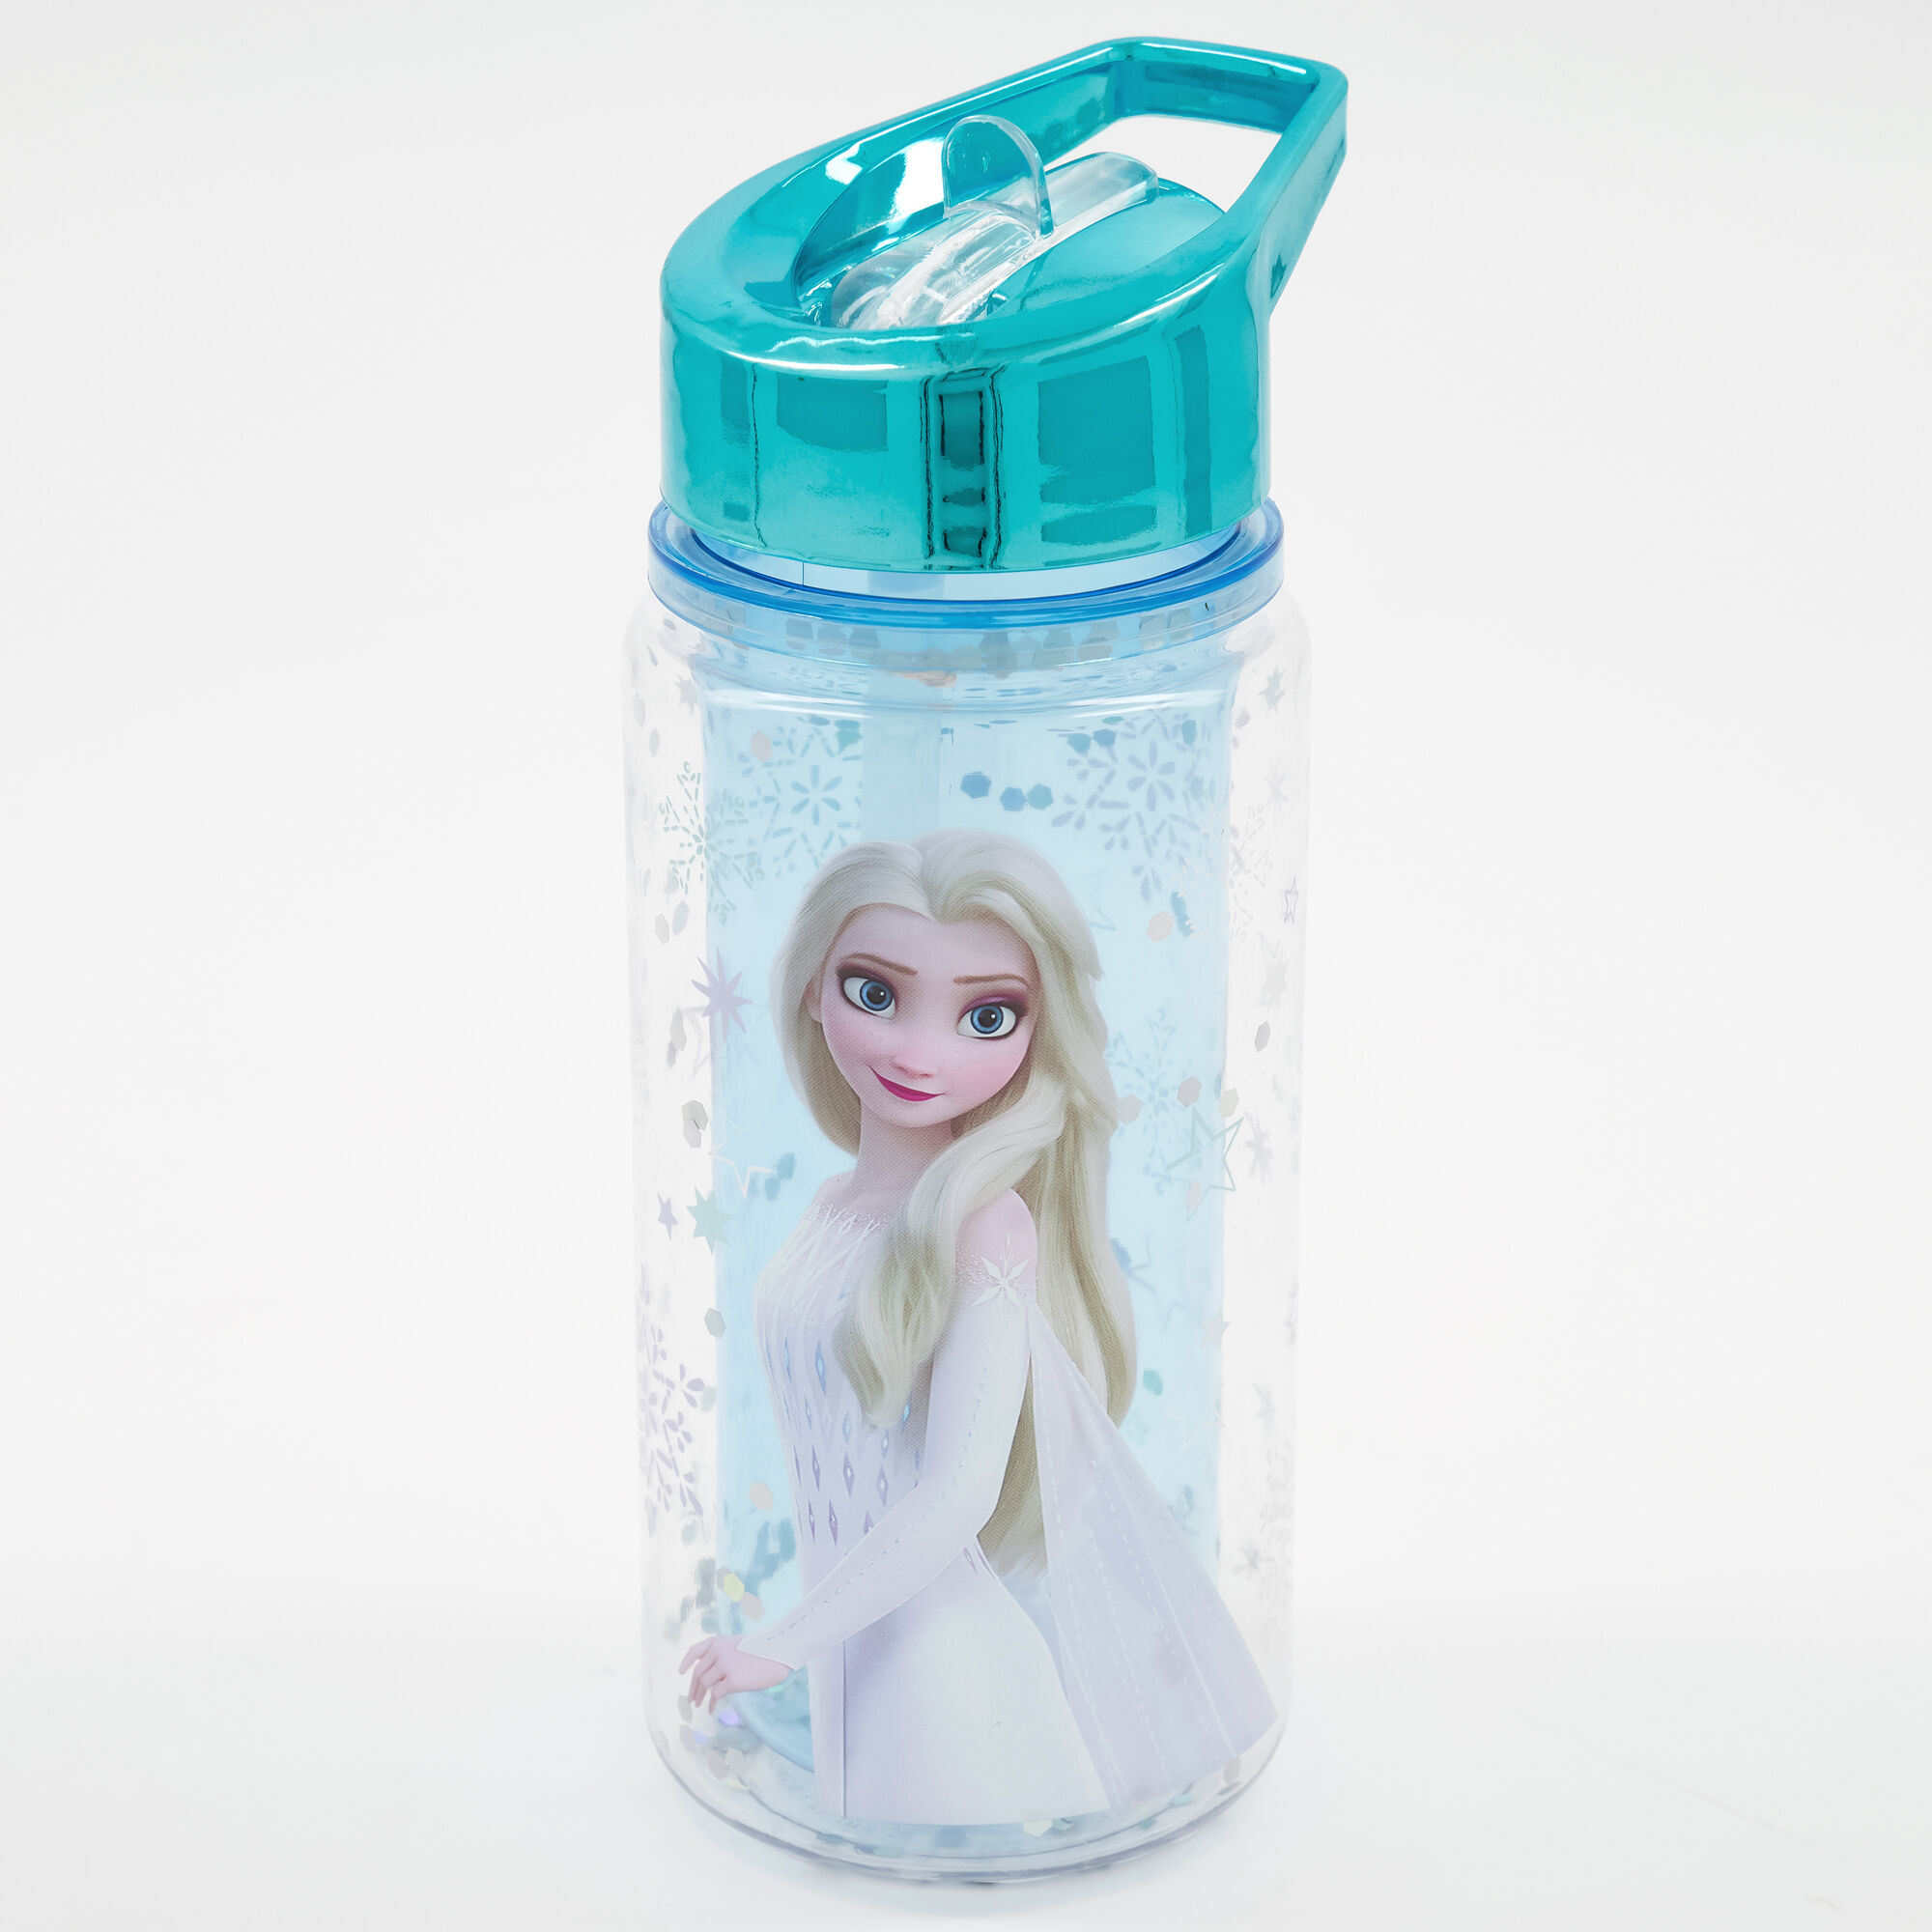 View Claires Disney Frozen Water Bottle Blue information